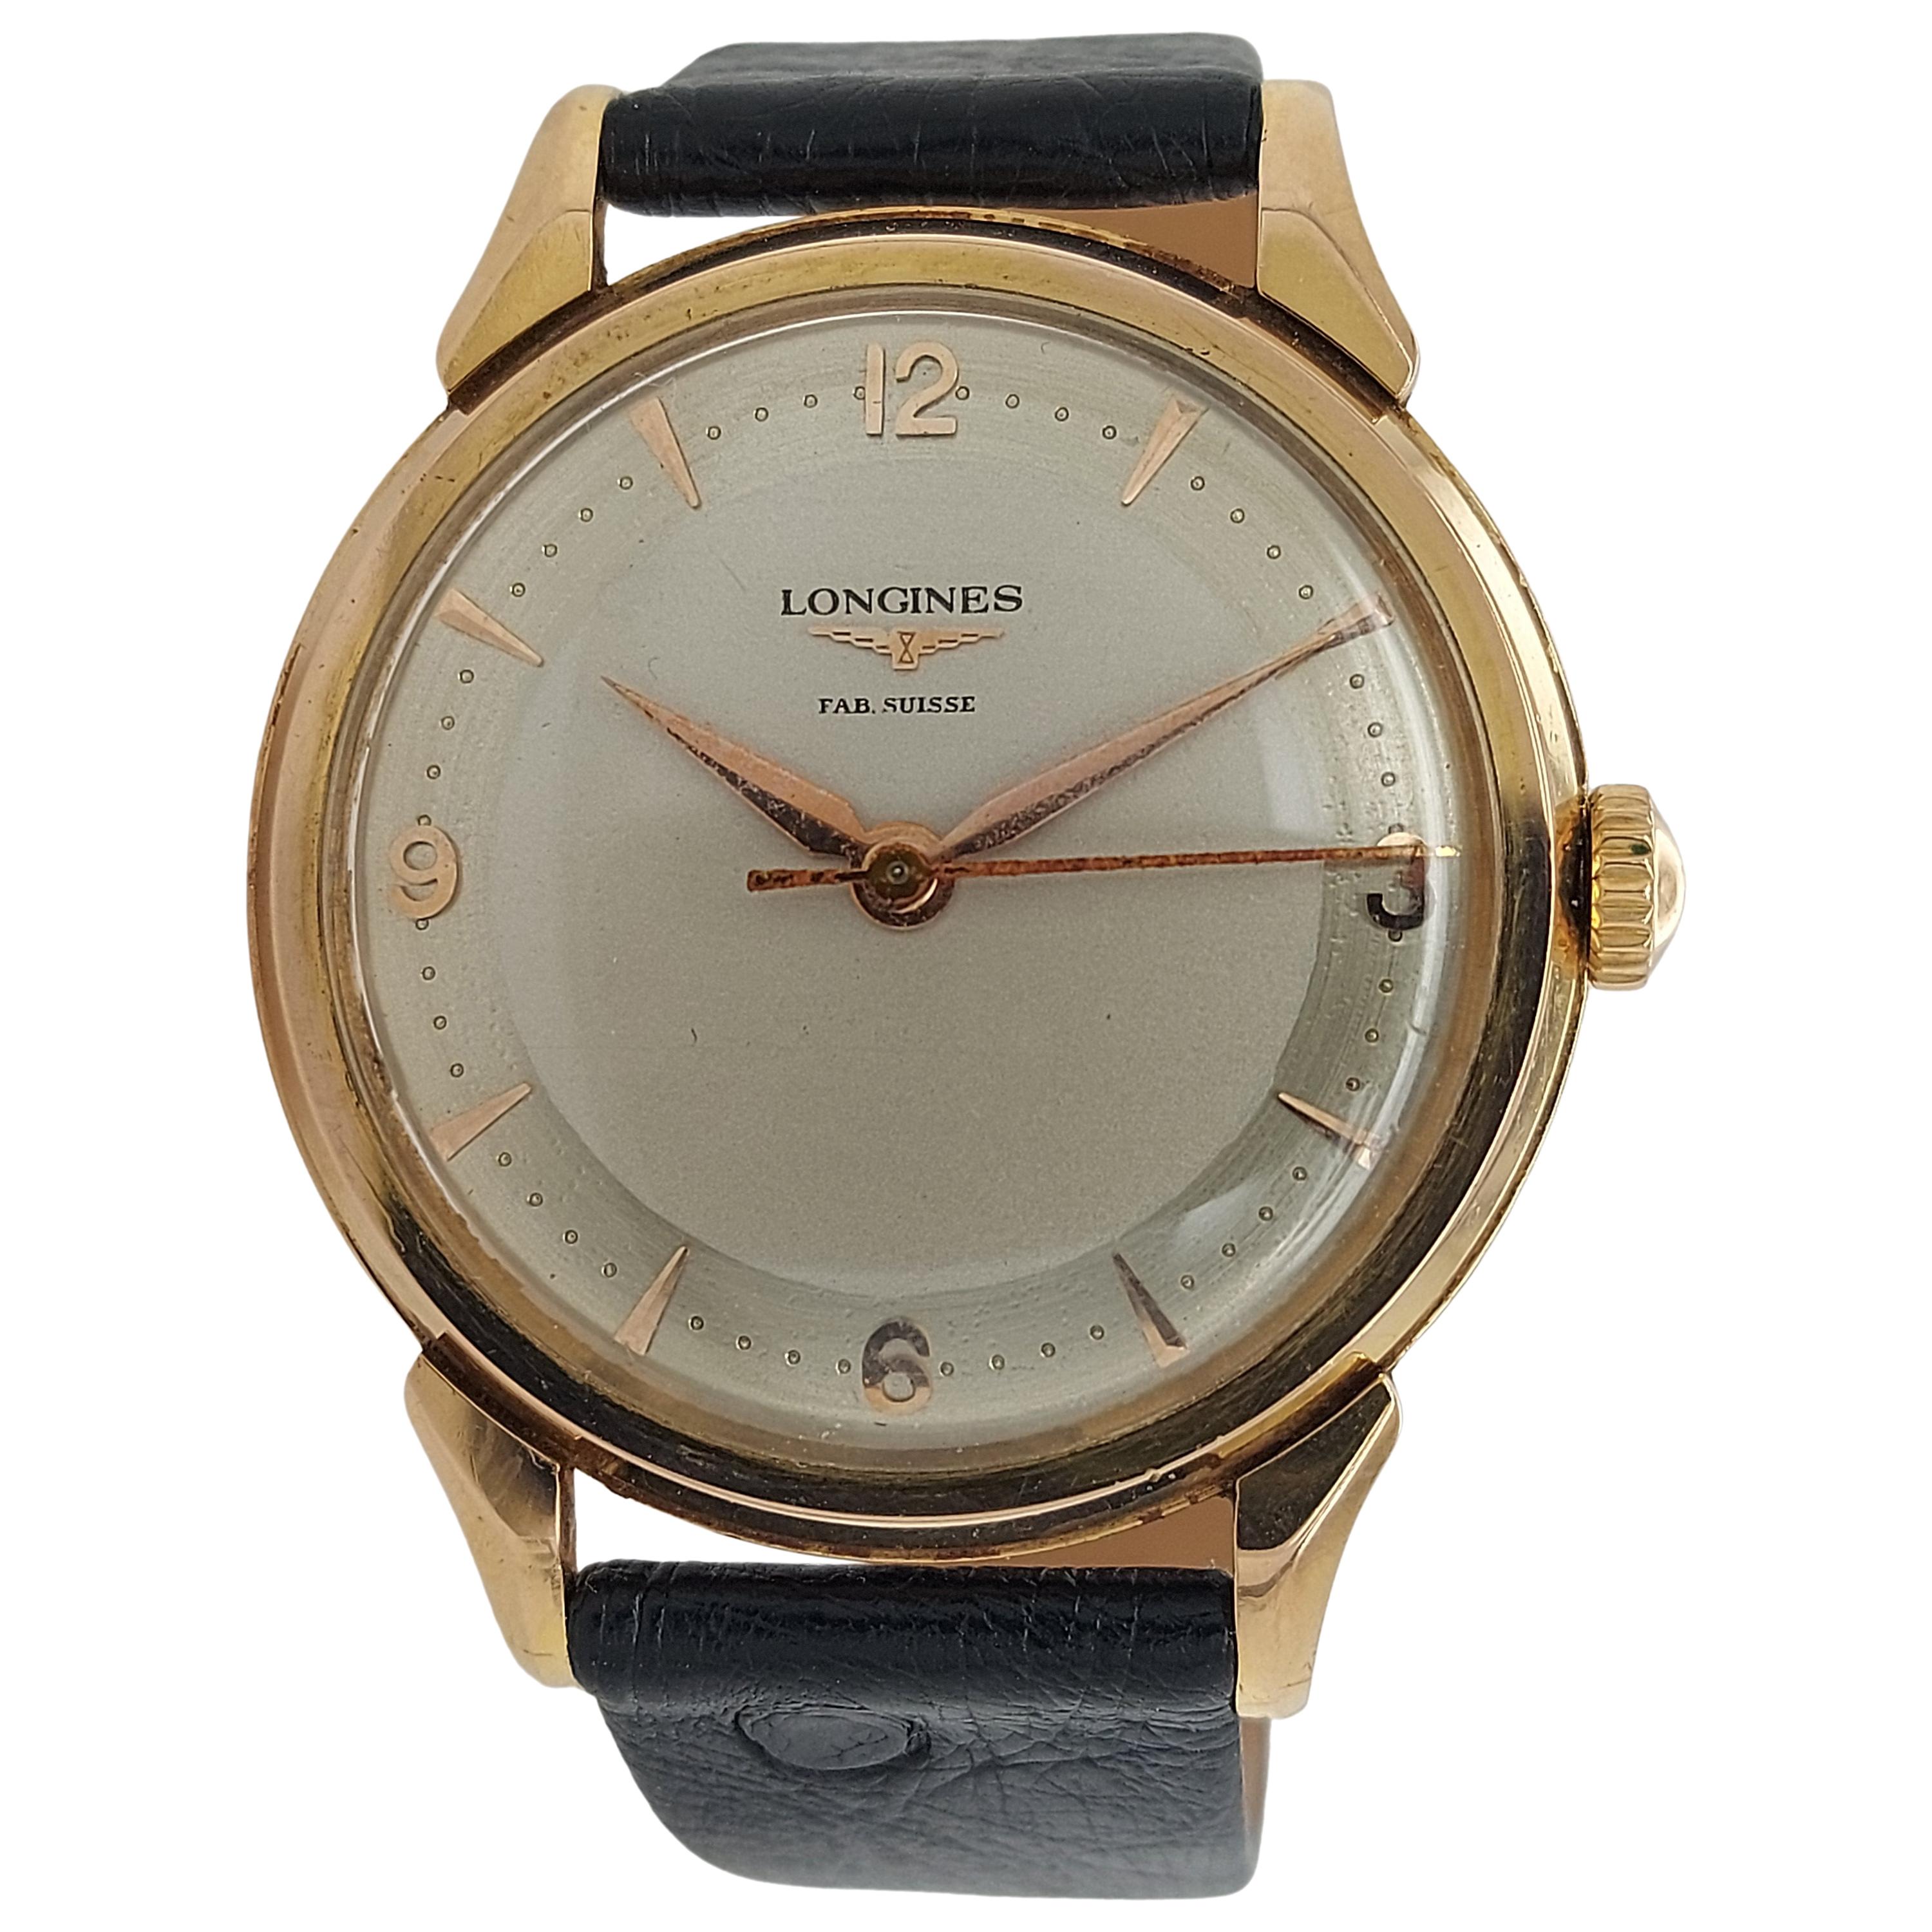 Longines Fab Suisse, 18 Karat Yellow Gold Case, Handwinding Wristwatch